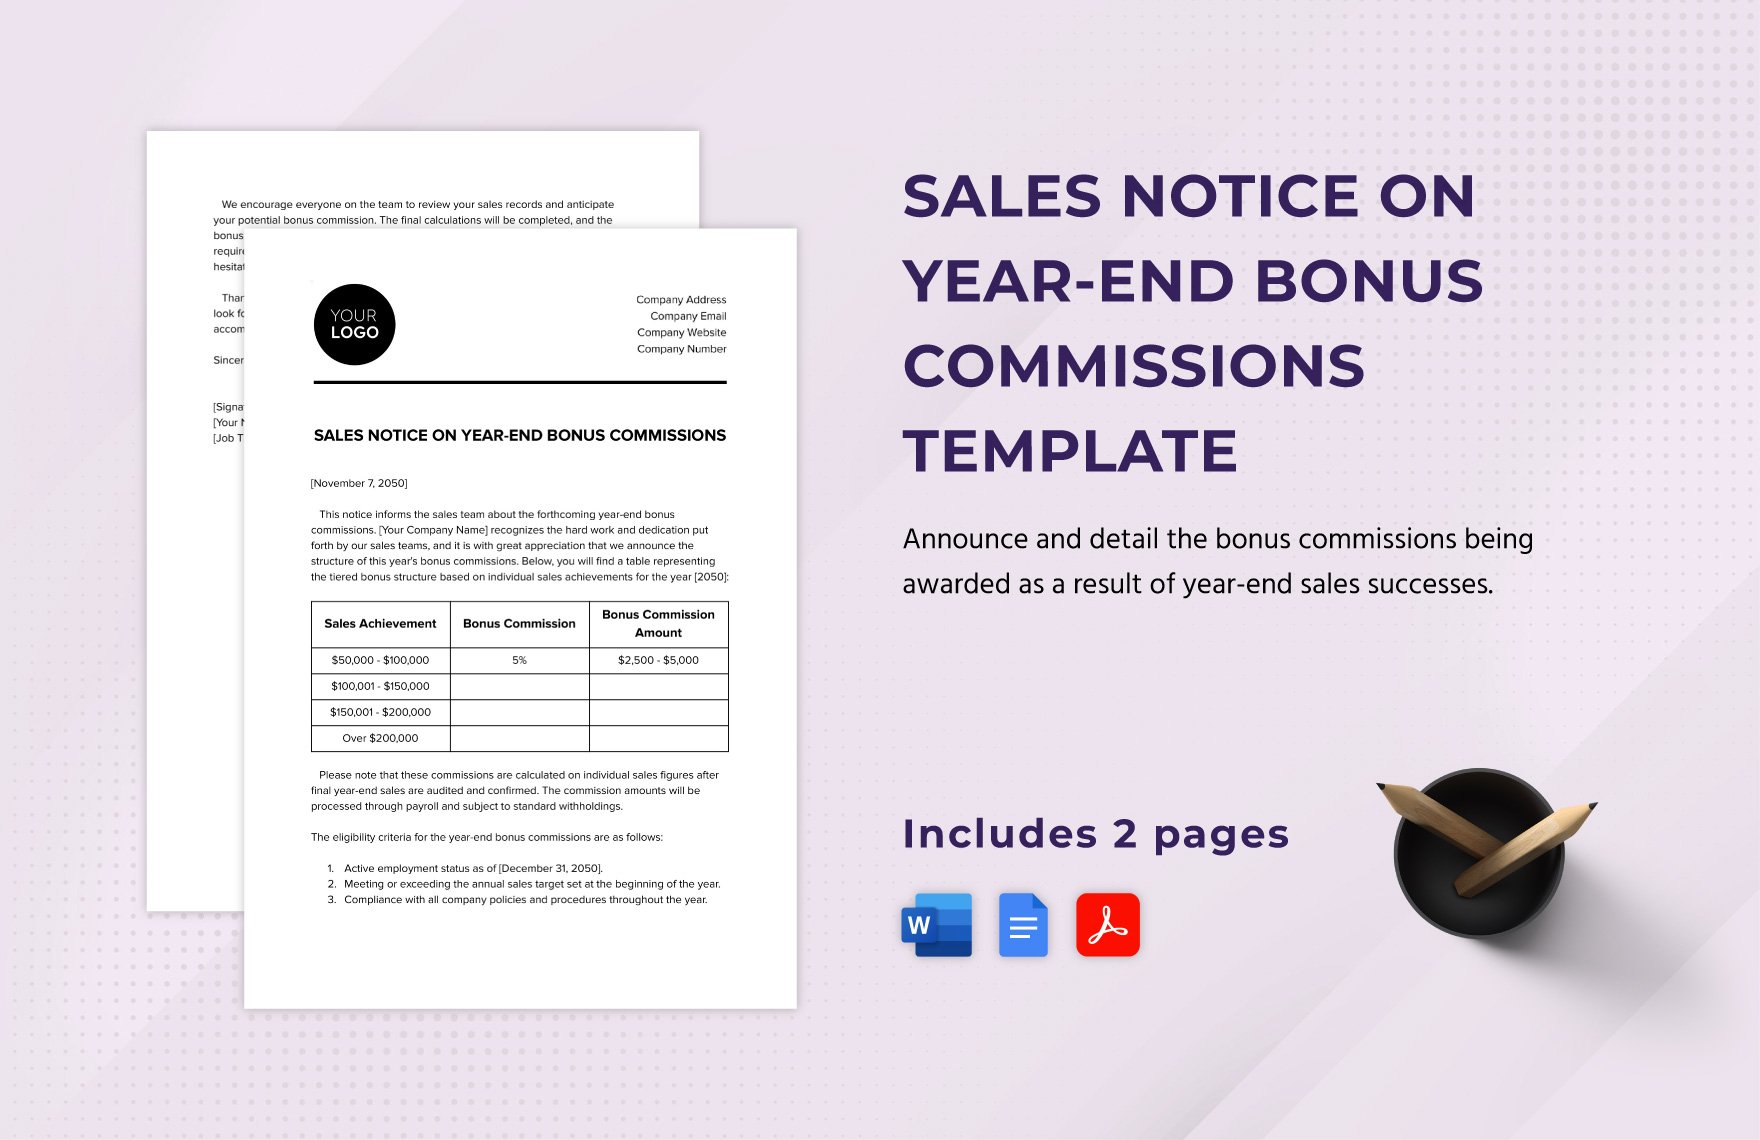 Sales Notice on Year-End Bonus Commissions Template